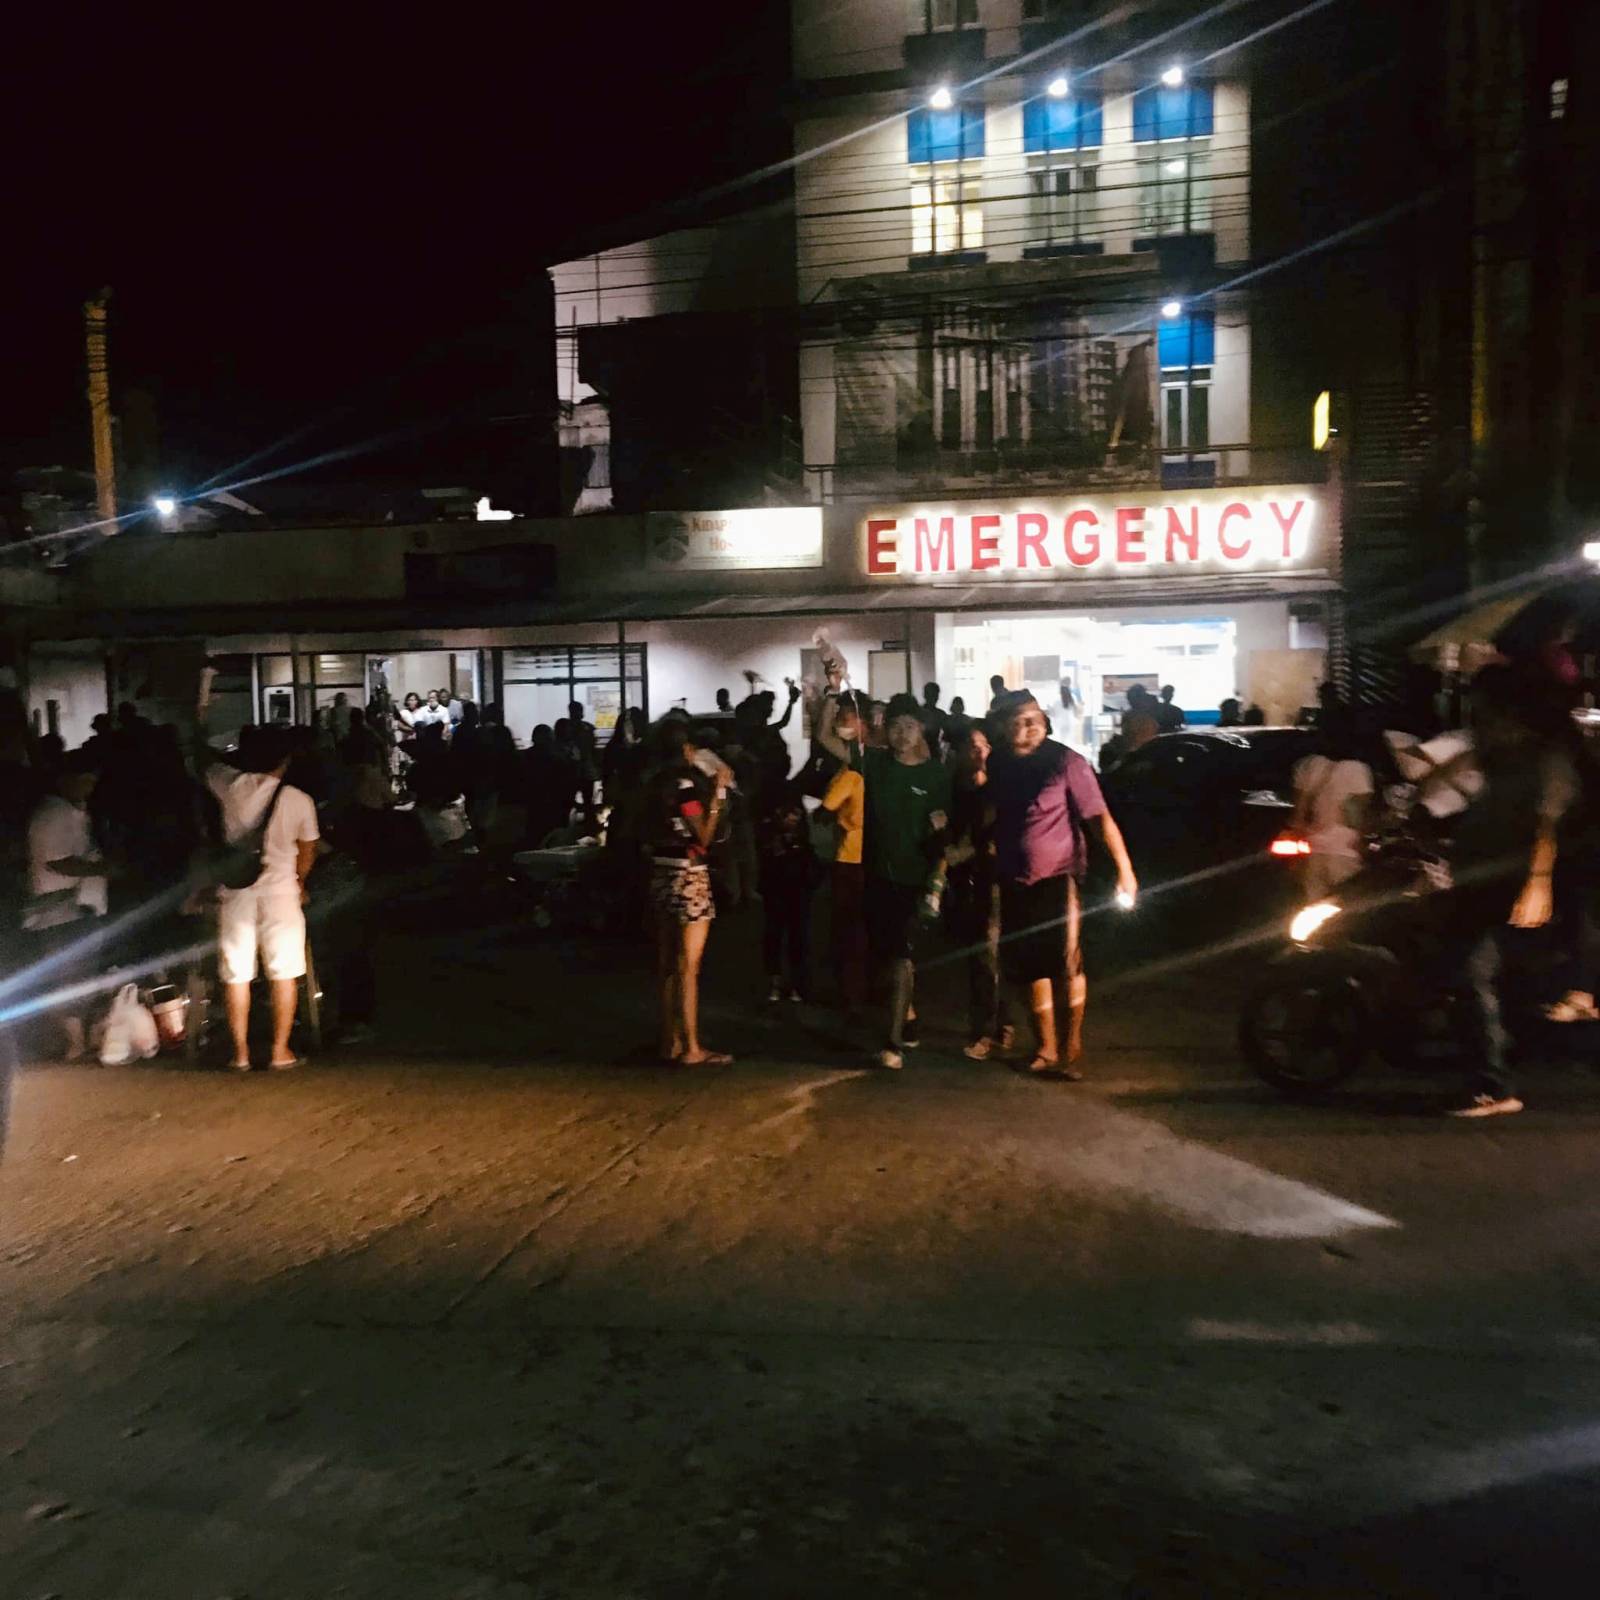 People are seen receiving assistance outside Kidapawan Doctors Hospital in Kidapawan City, after an earthquake, in Kidapawan City